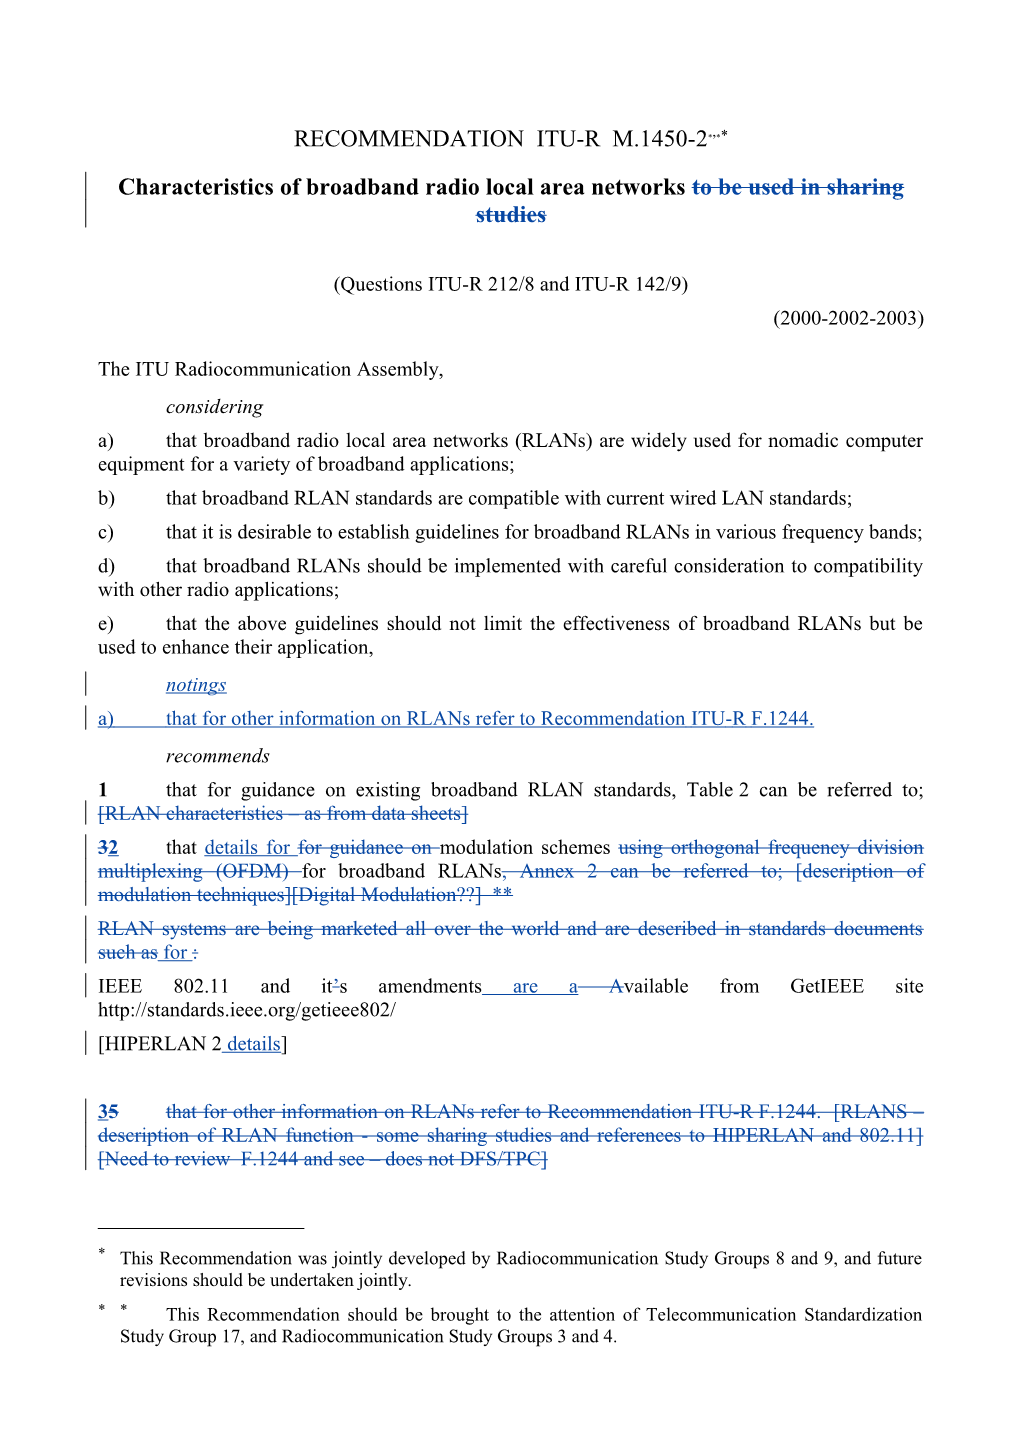 RECOMMENDATION ITU-R M.1450-2 - Characteristics of Broadband Radio Local Area Networks